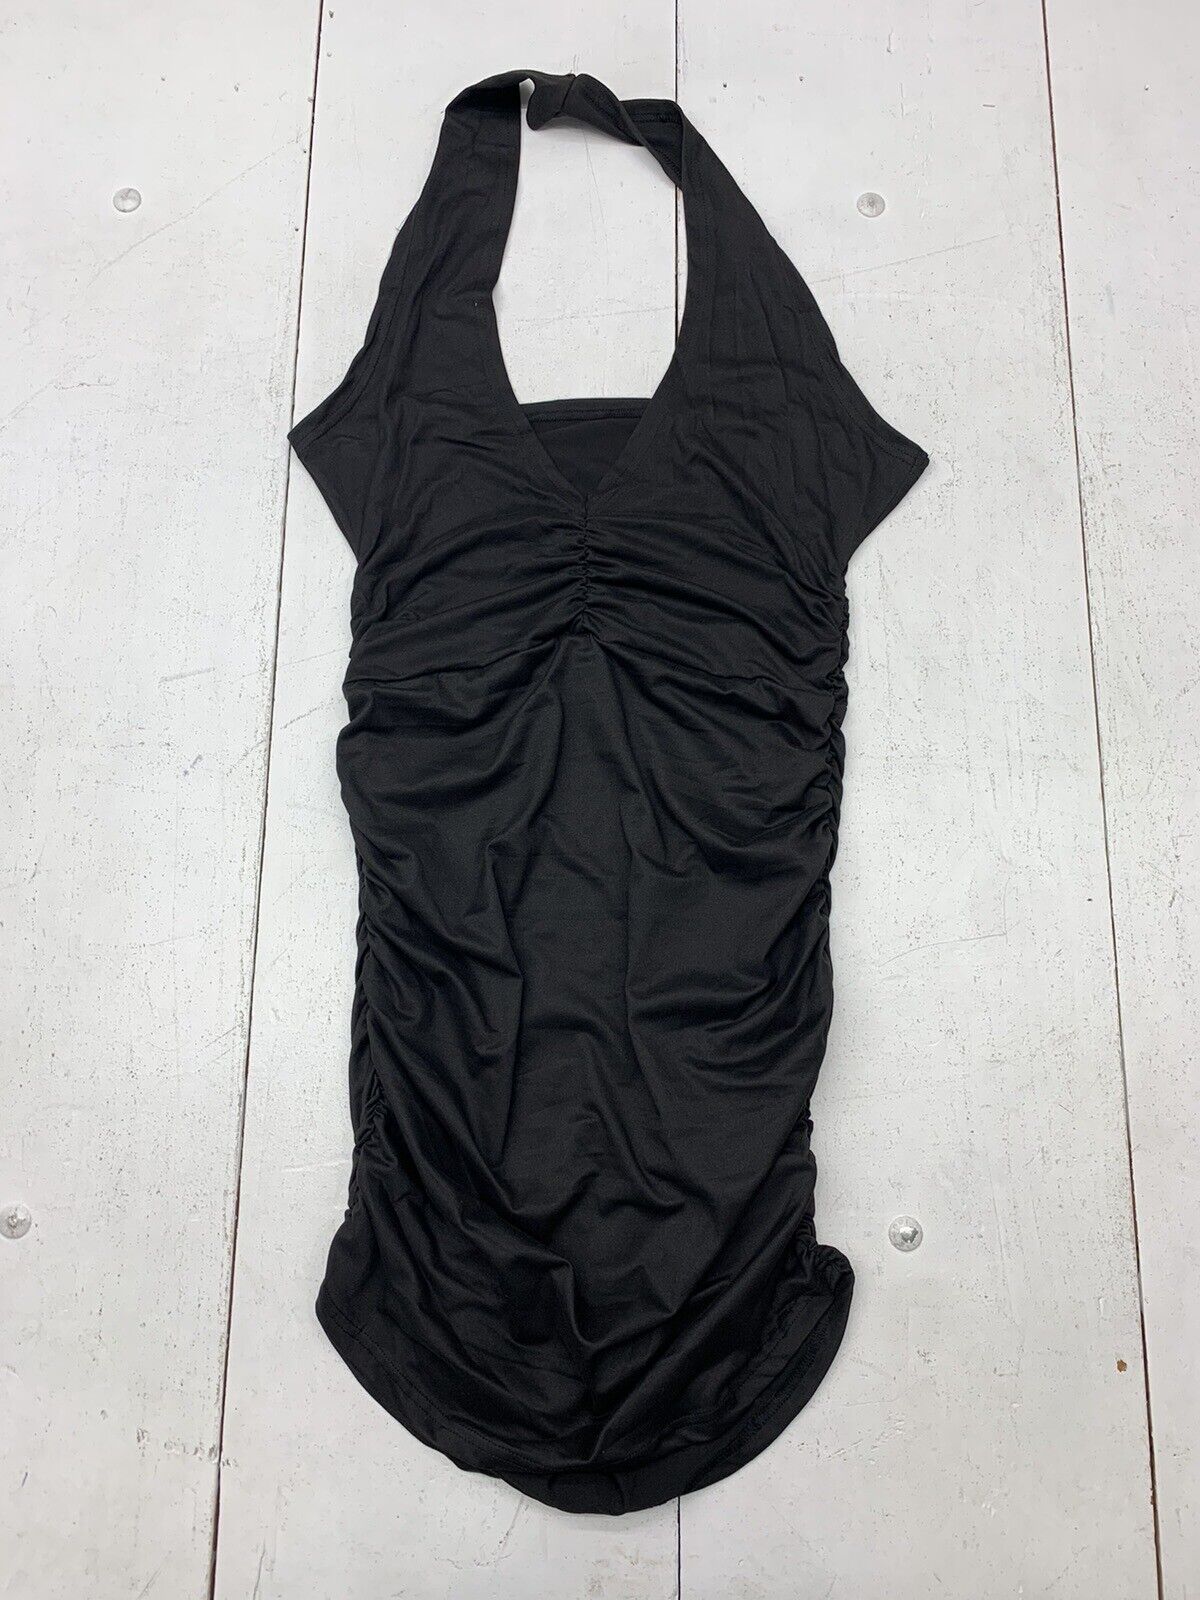 Heathyoga Womens Black Tennis Dress Size XL - beyond exchange